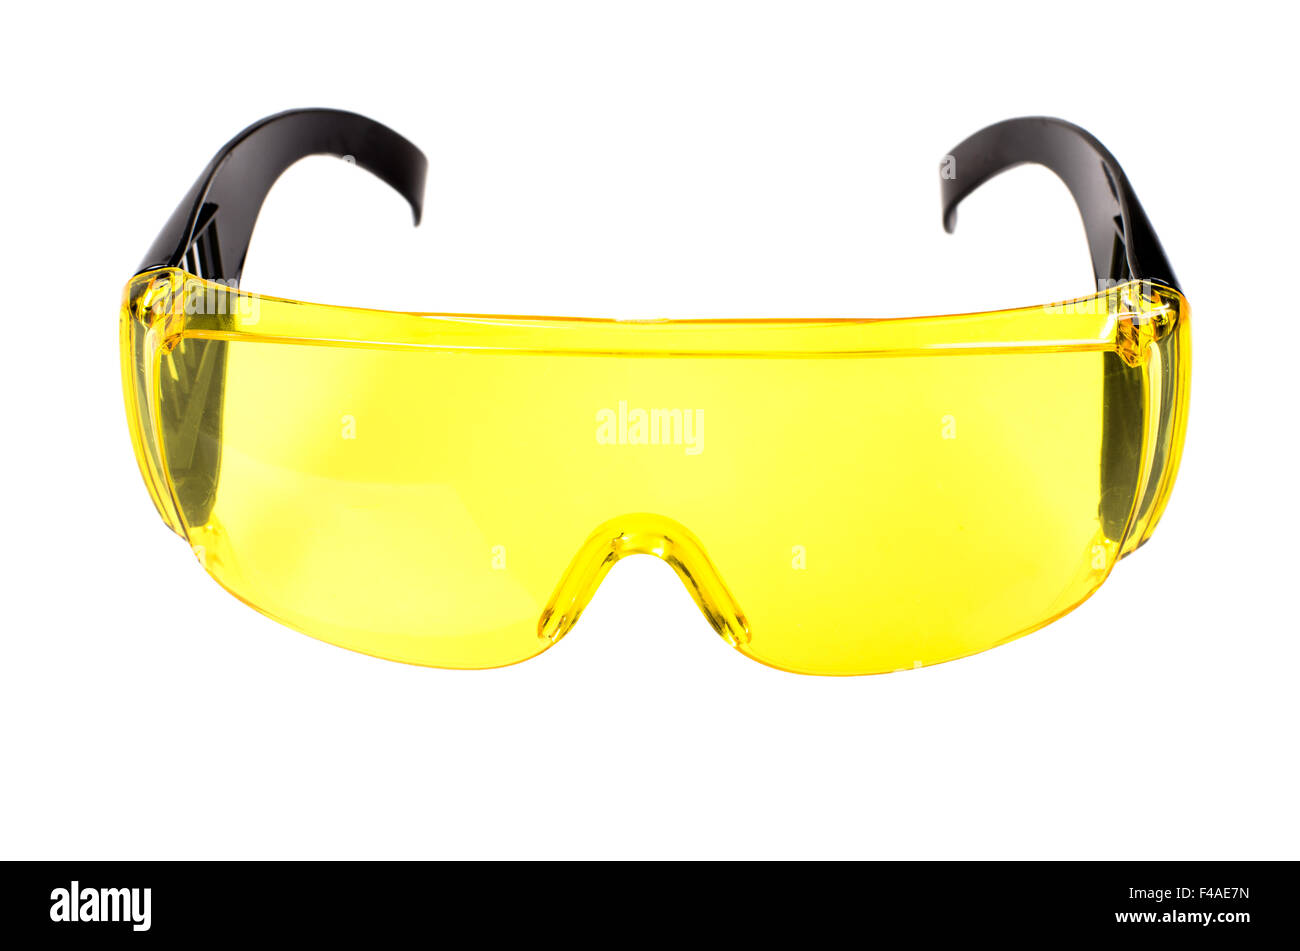 safety glasses Stock Photo